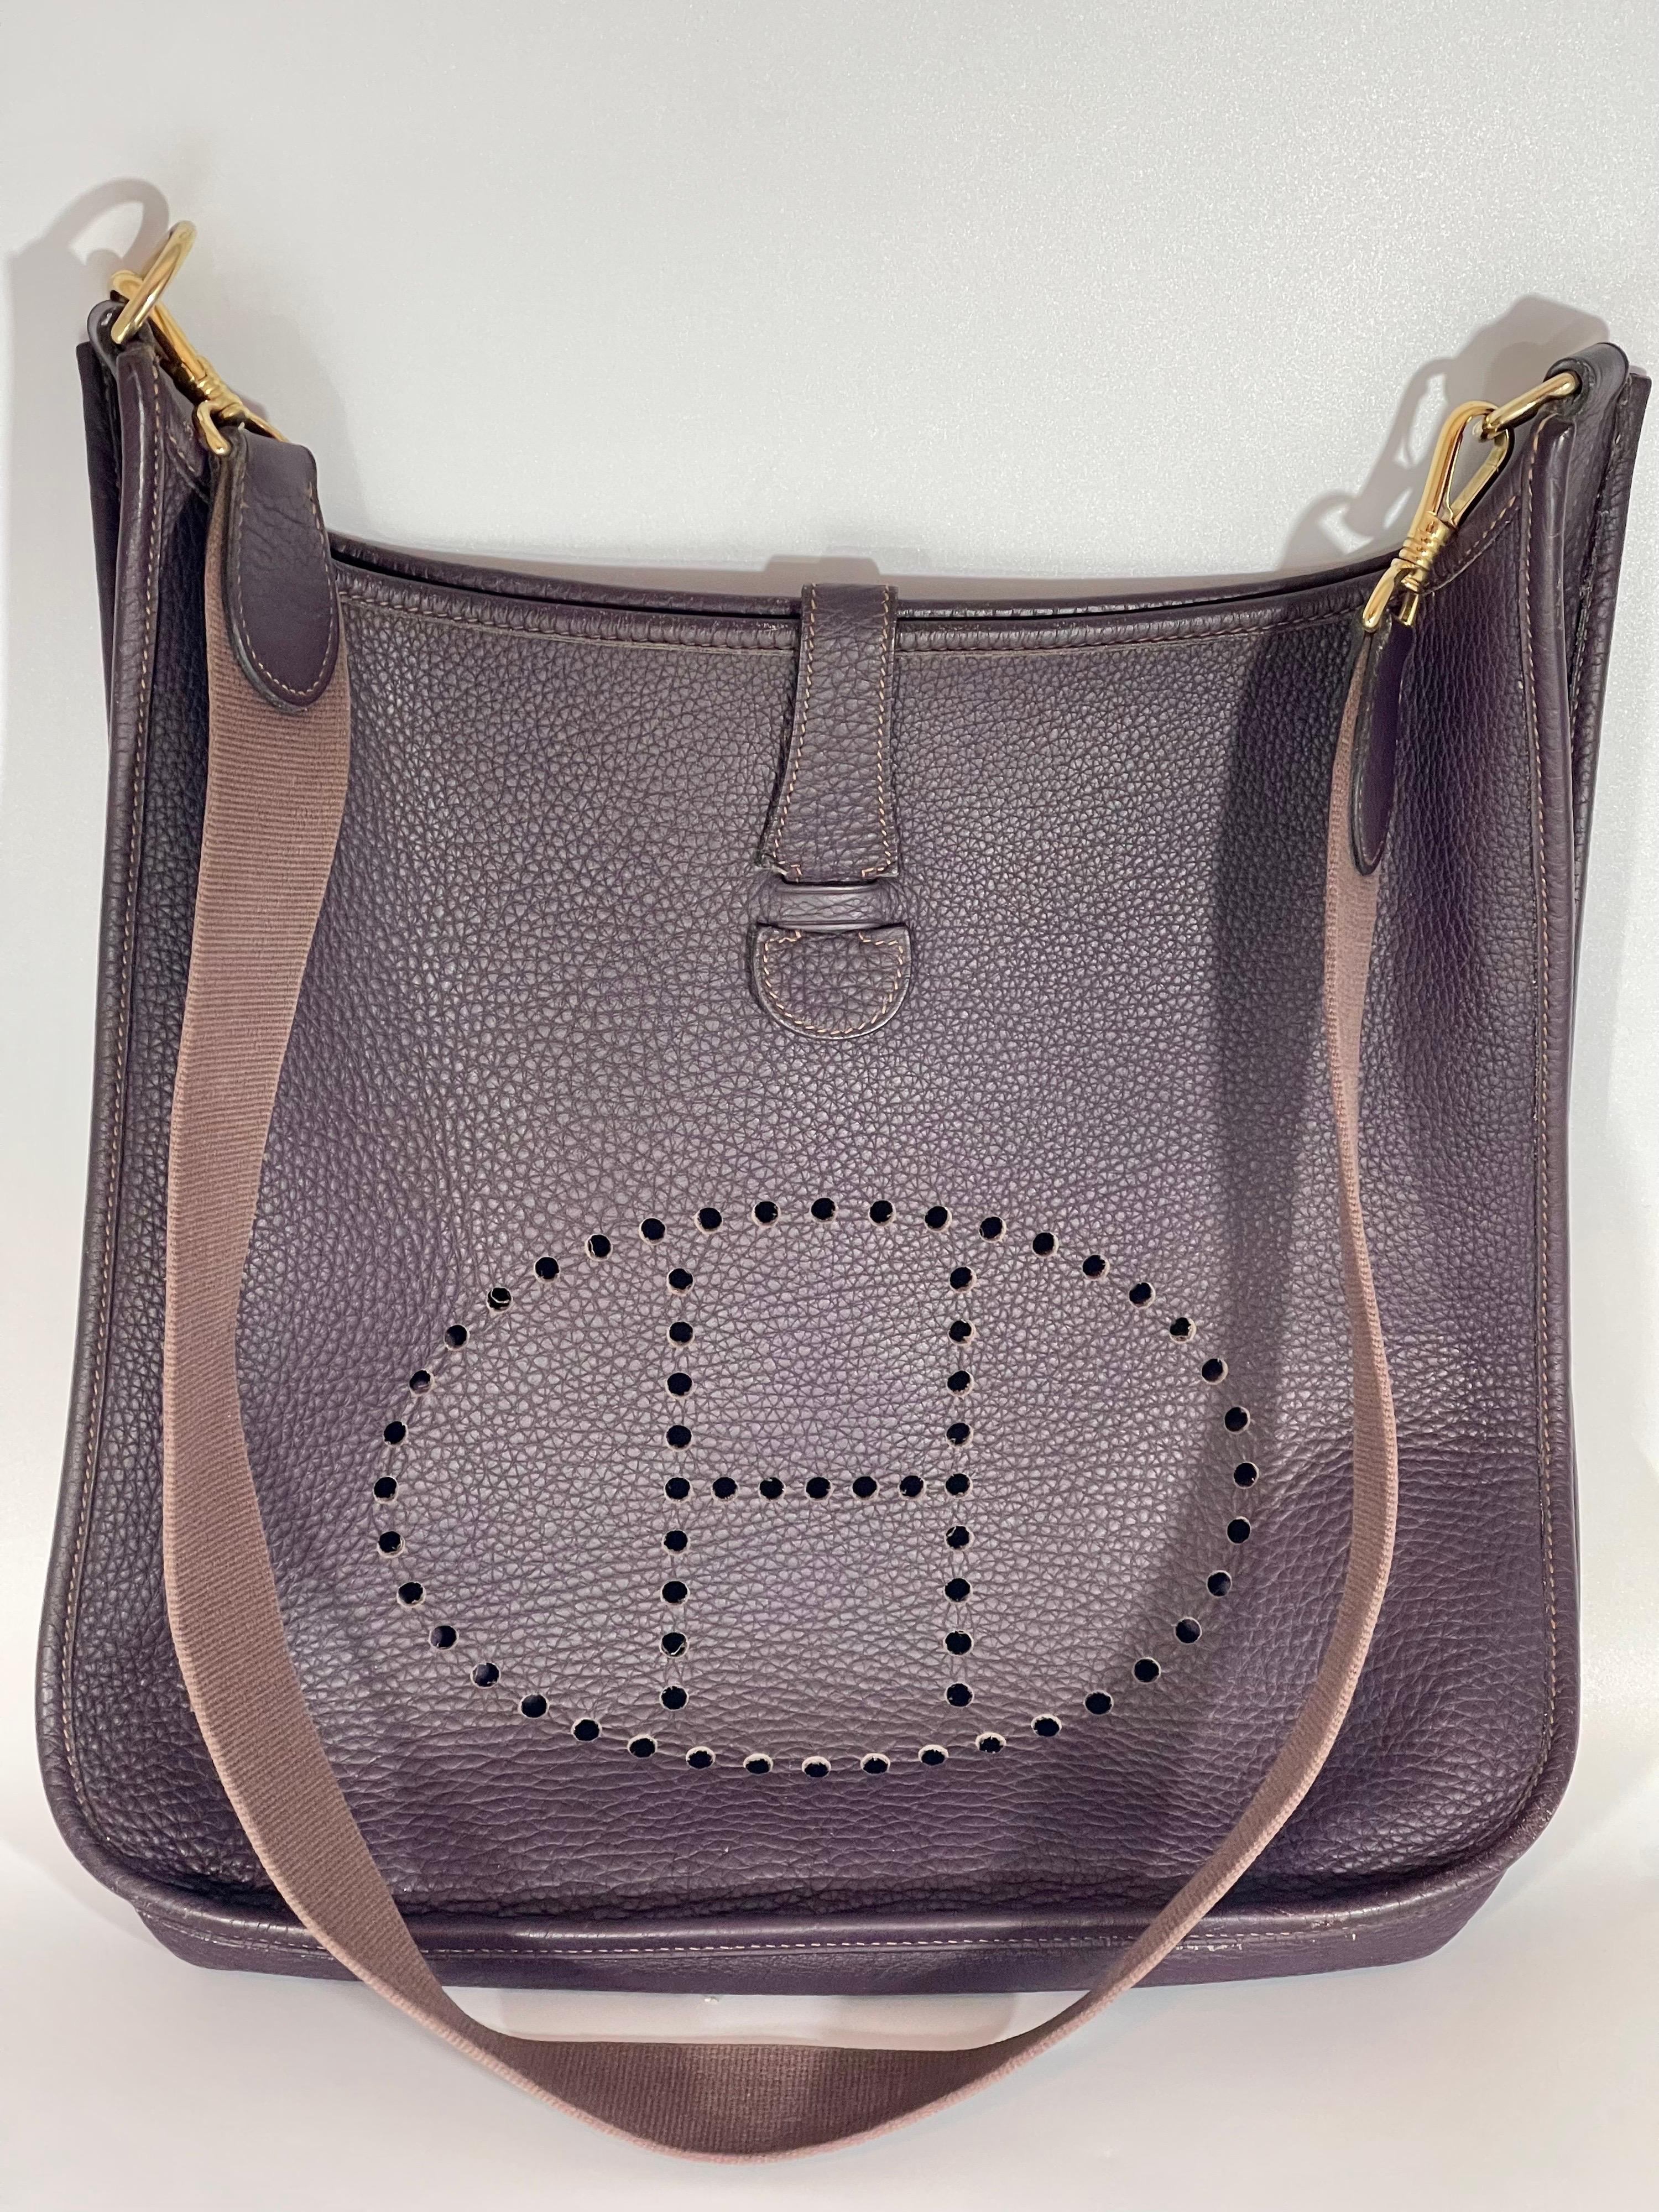 Hermès Evelyne Pm Dark Brown / Chocolate Leather Cross Body Bag Like New For Sale 6